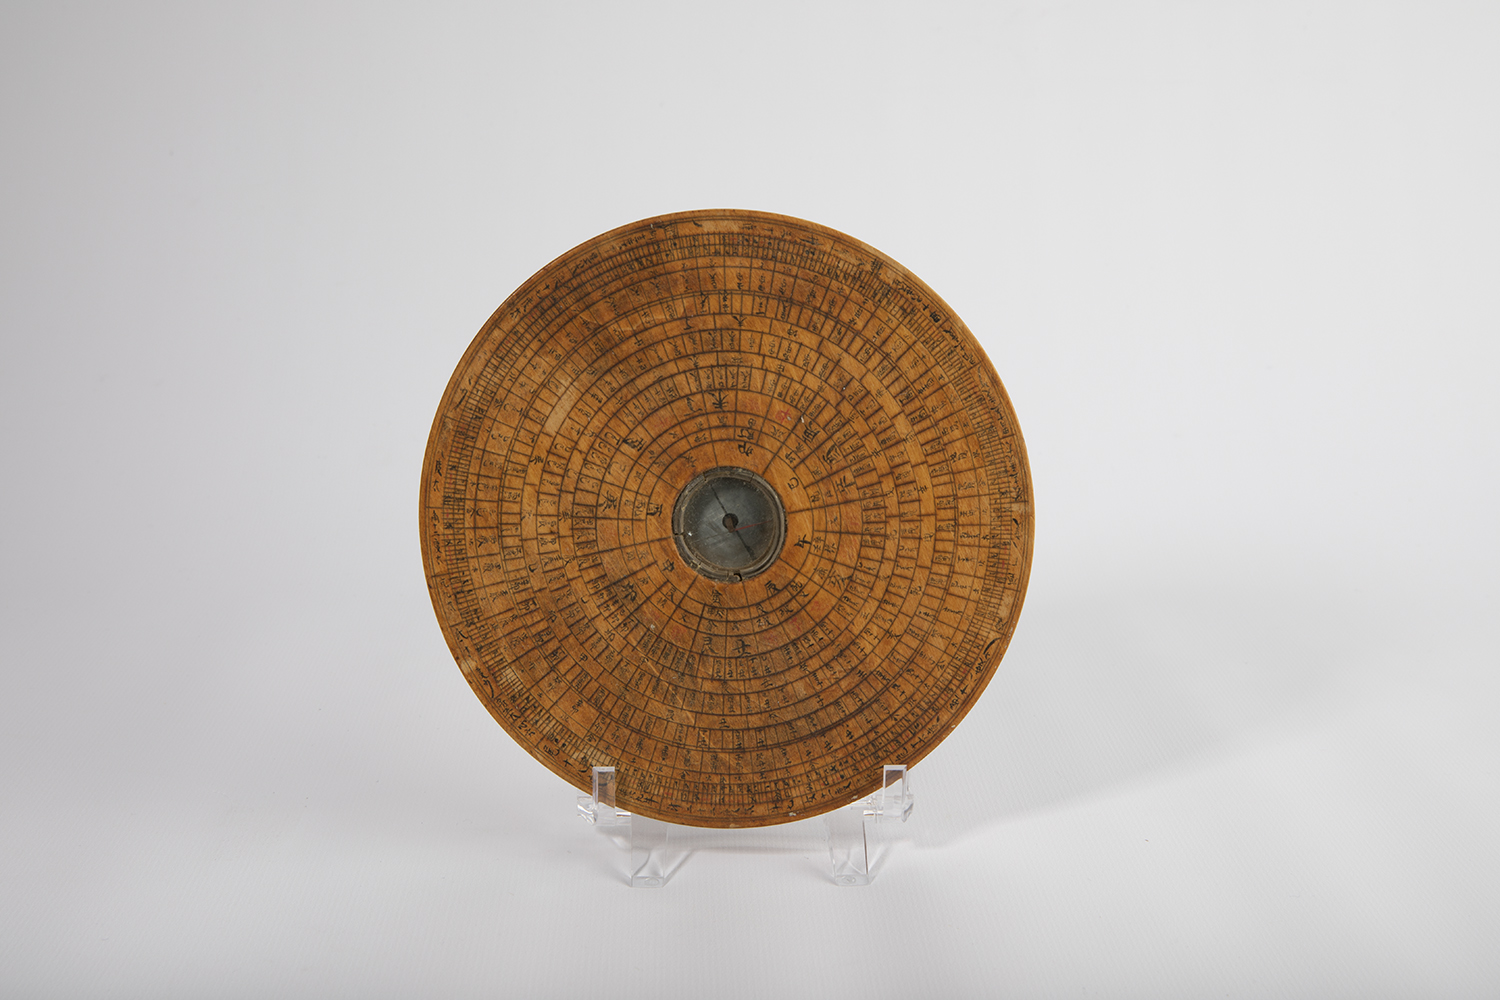 Geomancer's Compass, China, 19th–20th century